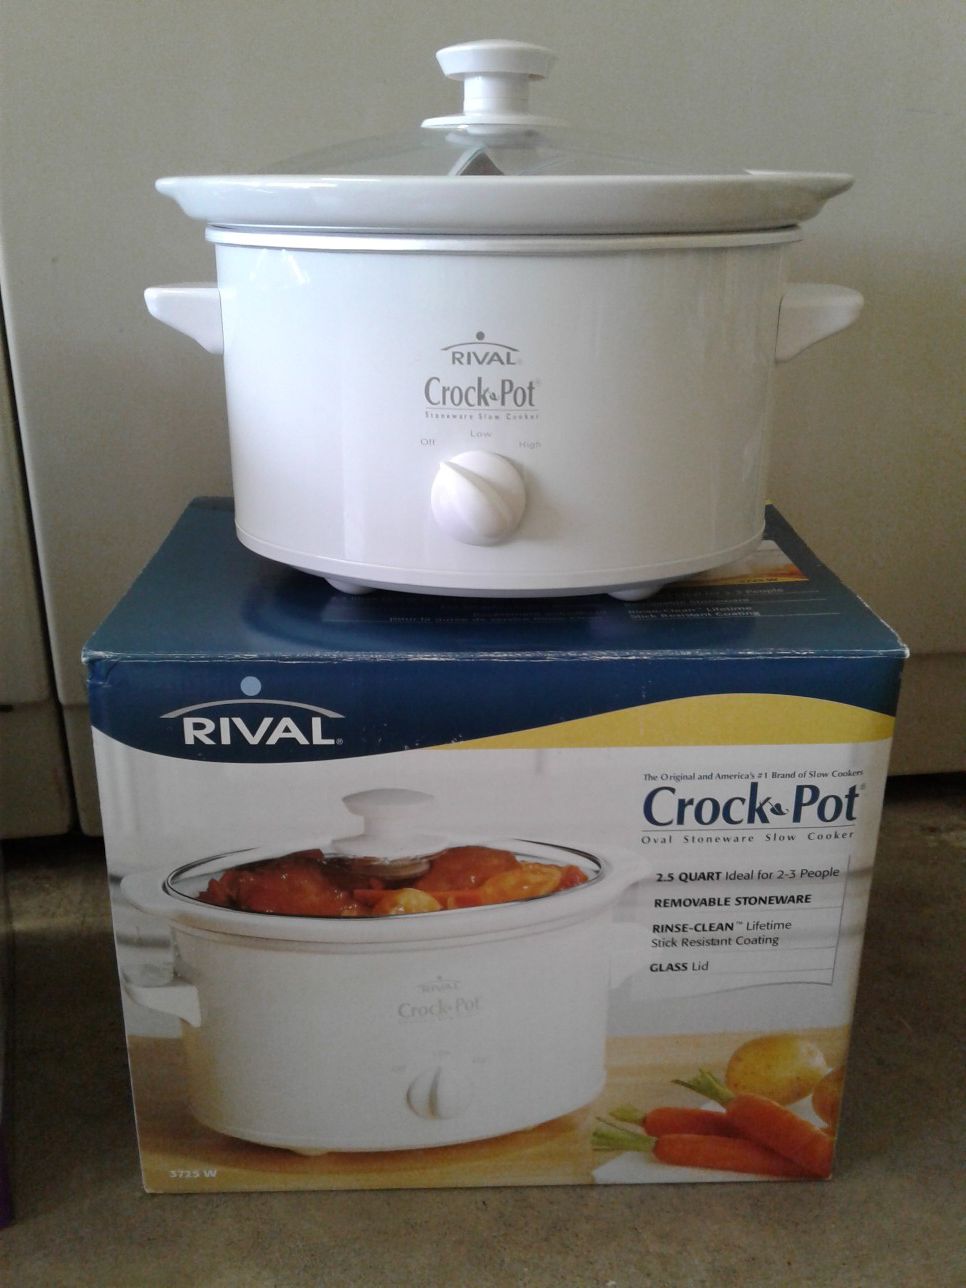 ⭐ Vintage Rival Crock Pot 2.5 QT. Slow Cooker #3120gp 2-1/2 Qt